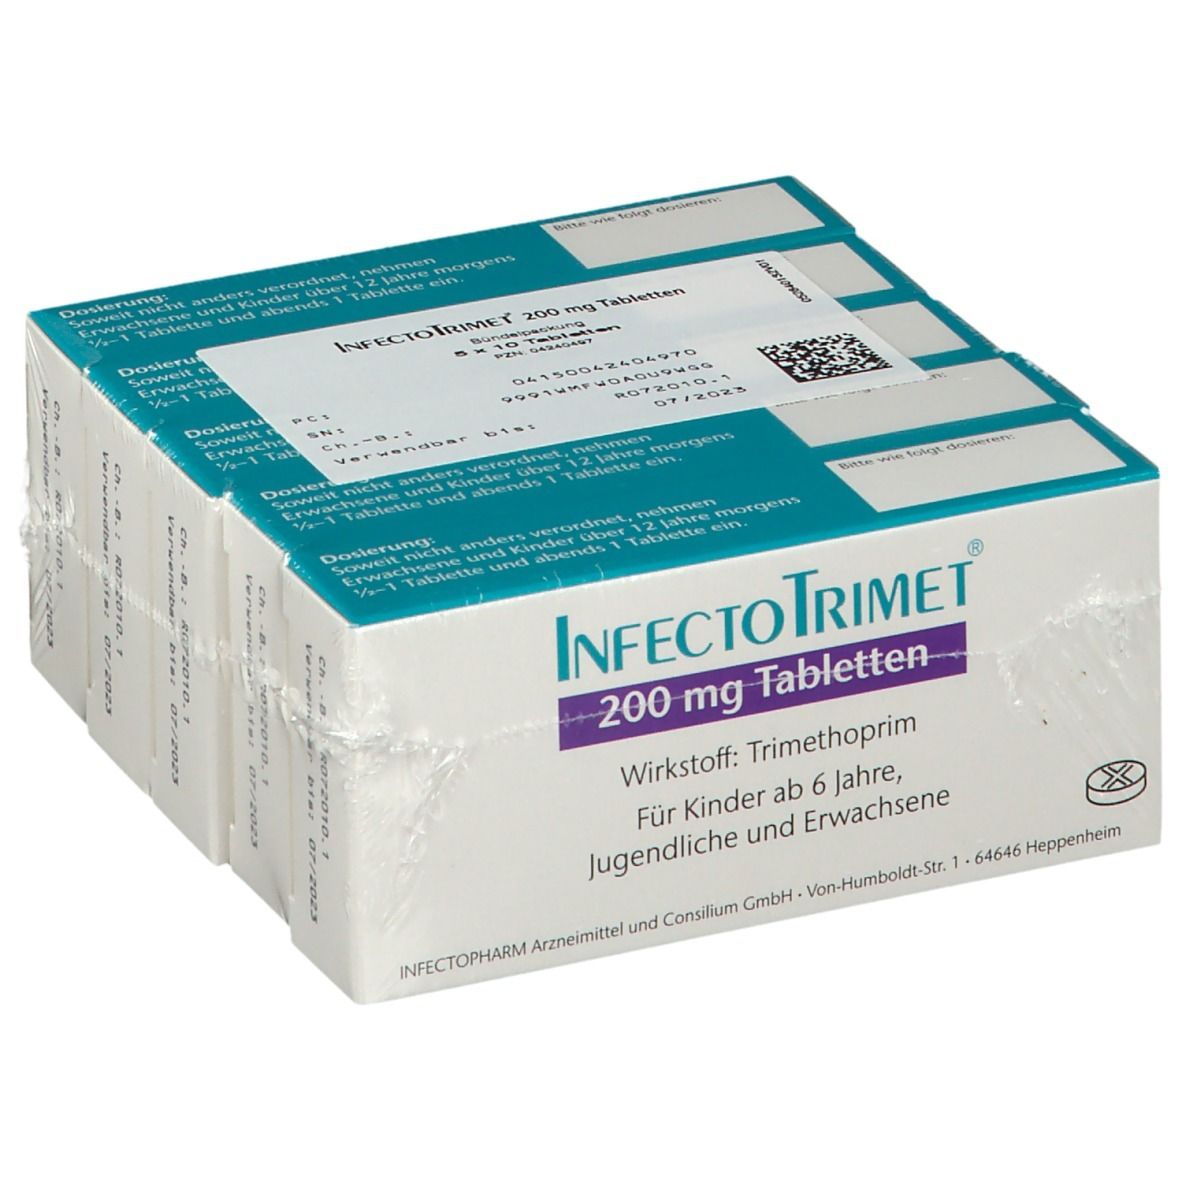 InfectoTrimet® 200 mg